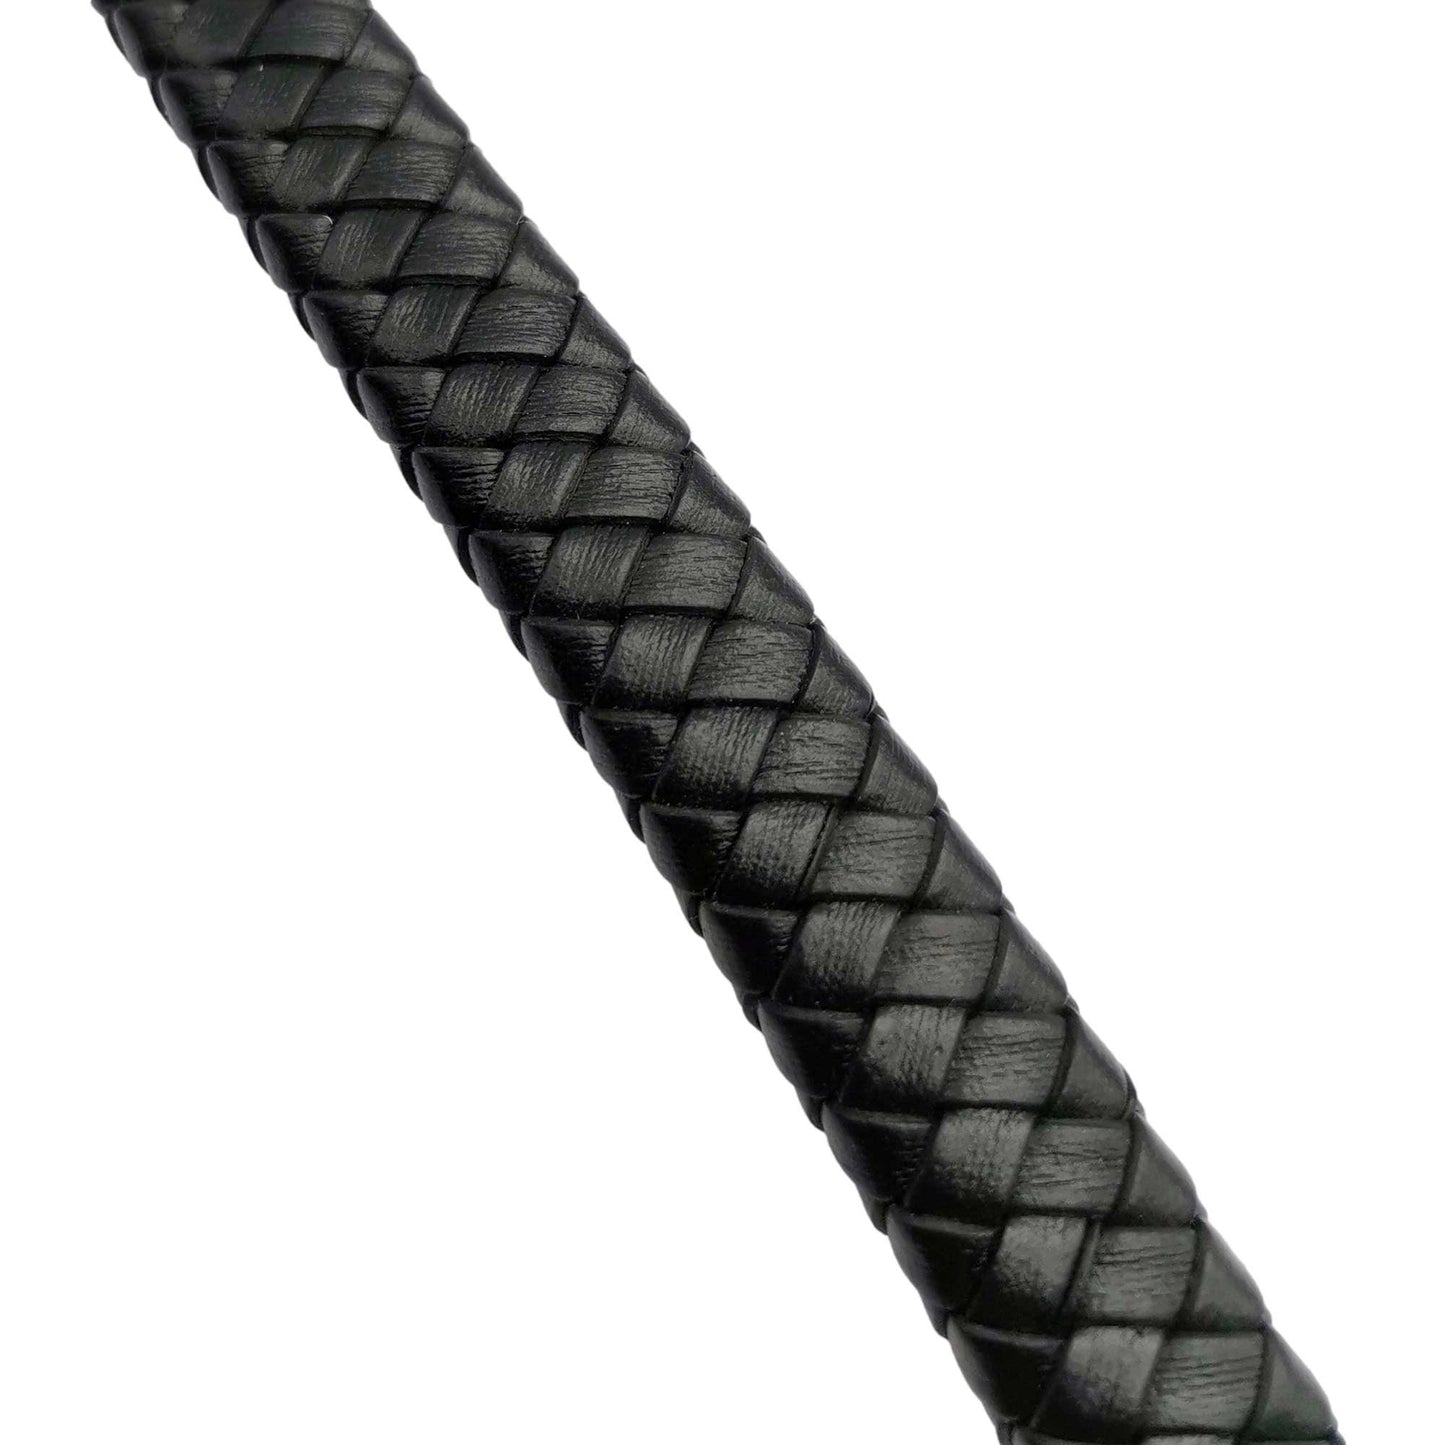 shapesbyX-10mm Flat Braided Leather Band Black 10x5mm Leather Bolo Strip Bracelet Making Craft